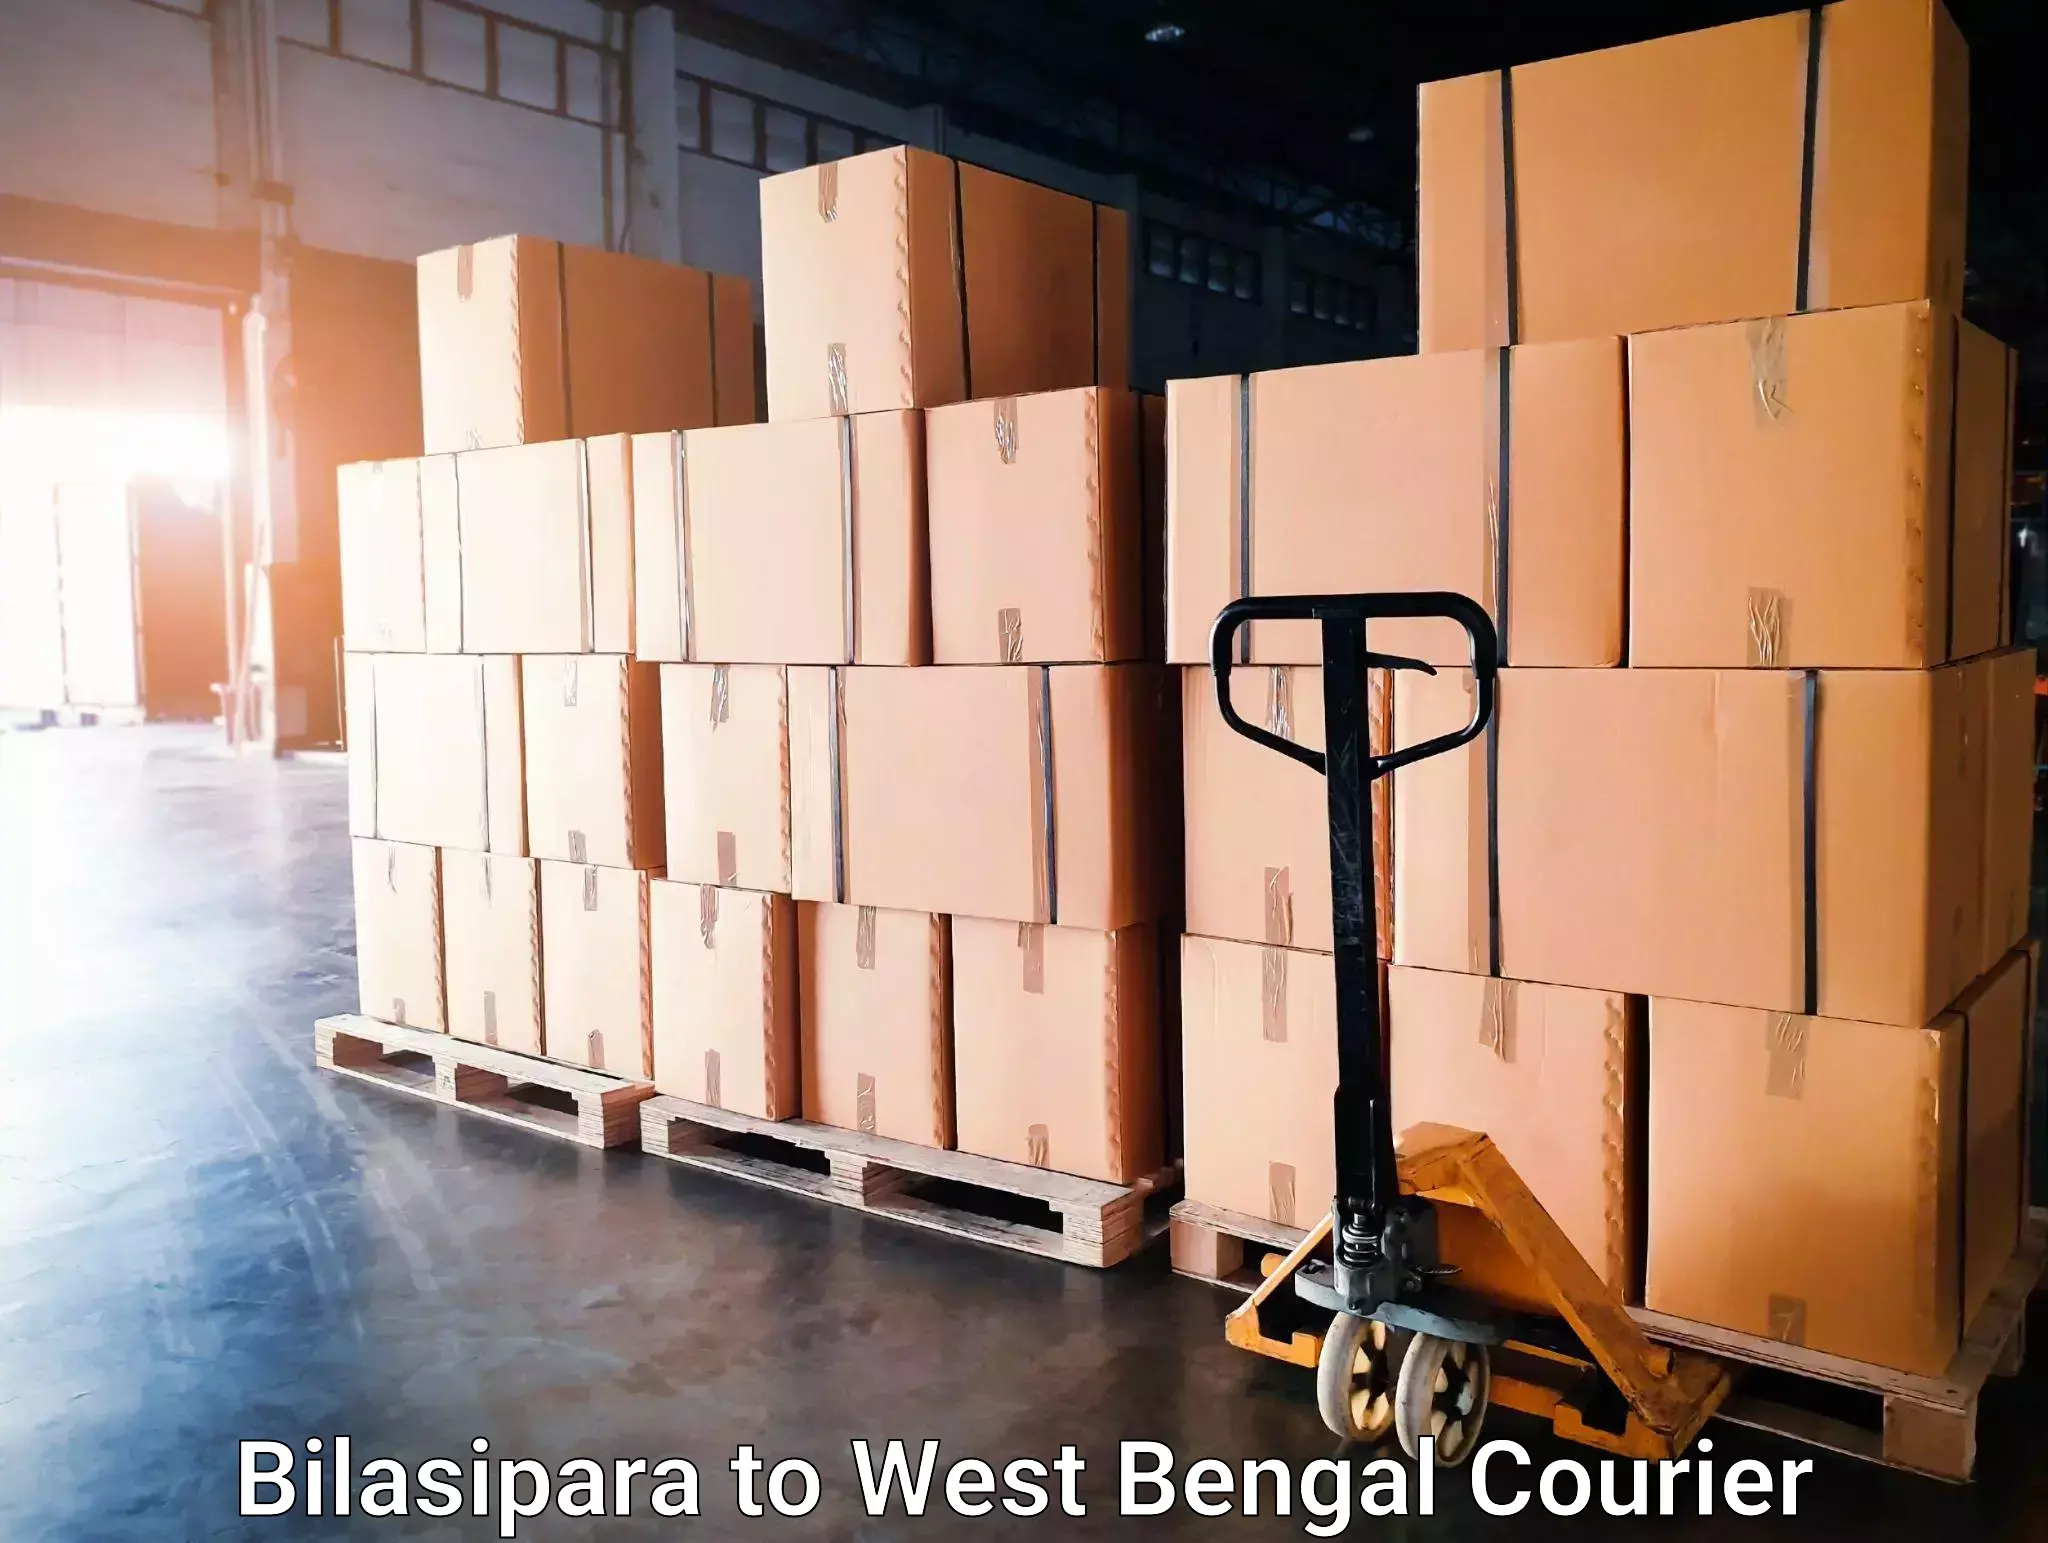 Courier service booking Bilasipara to Shantiniketan